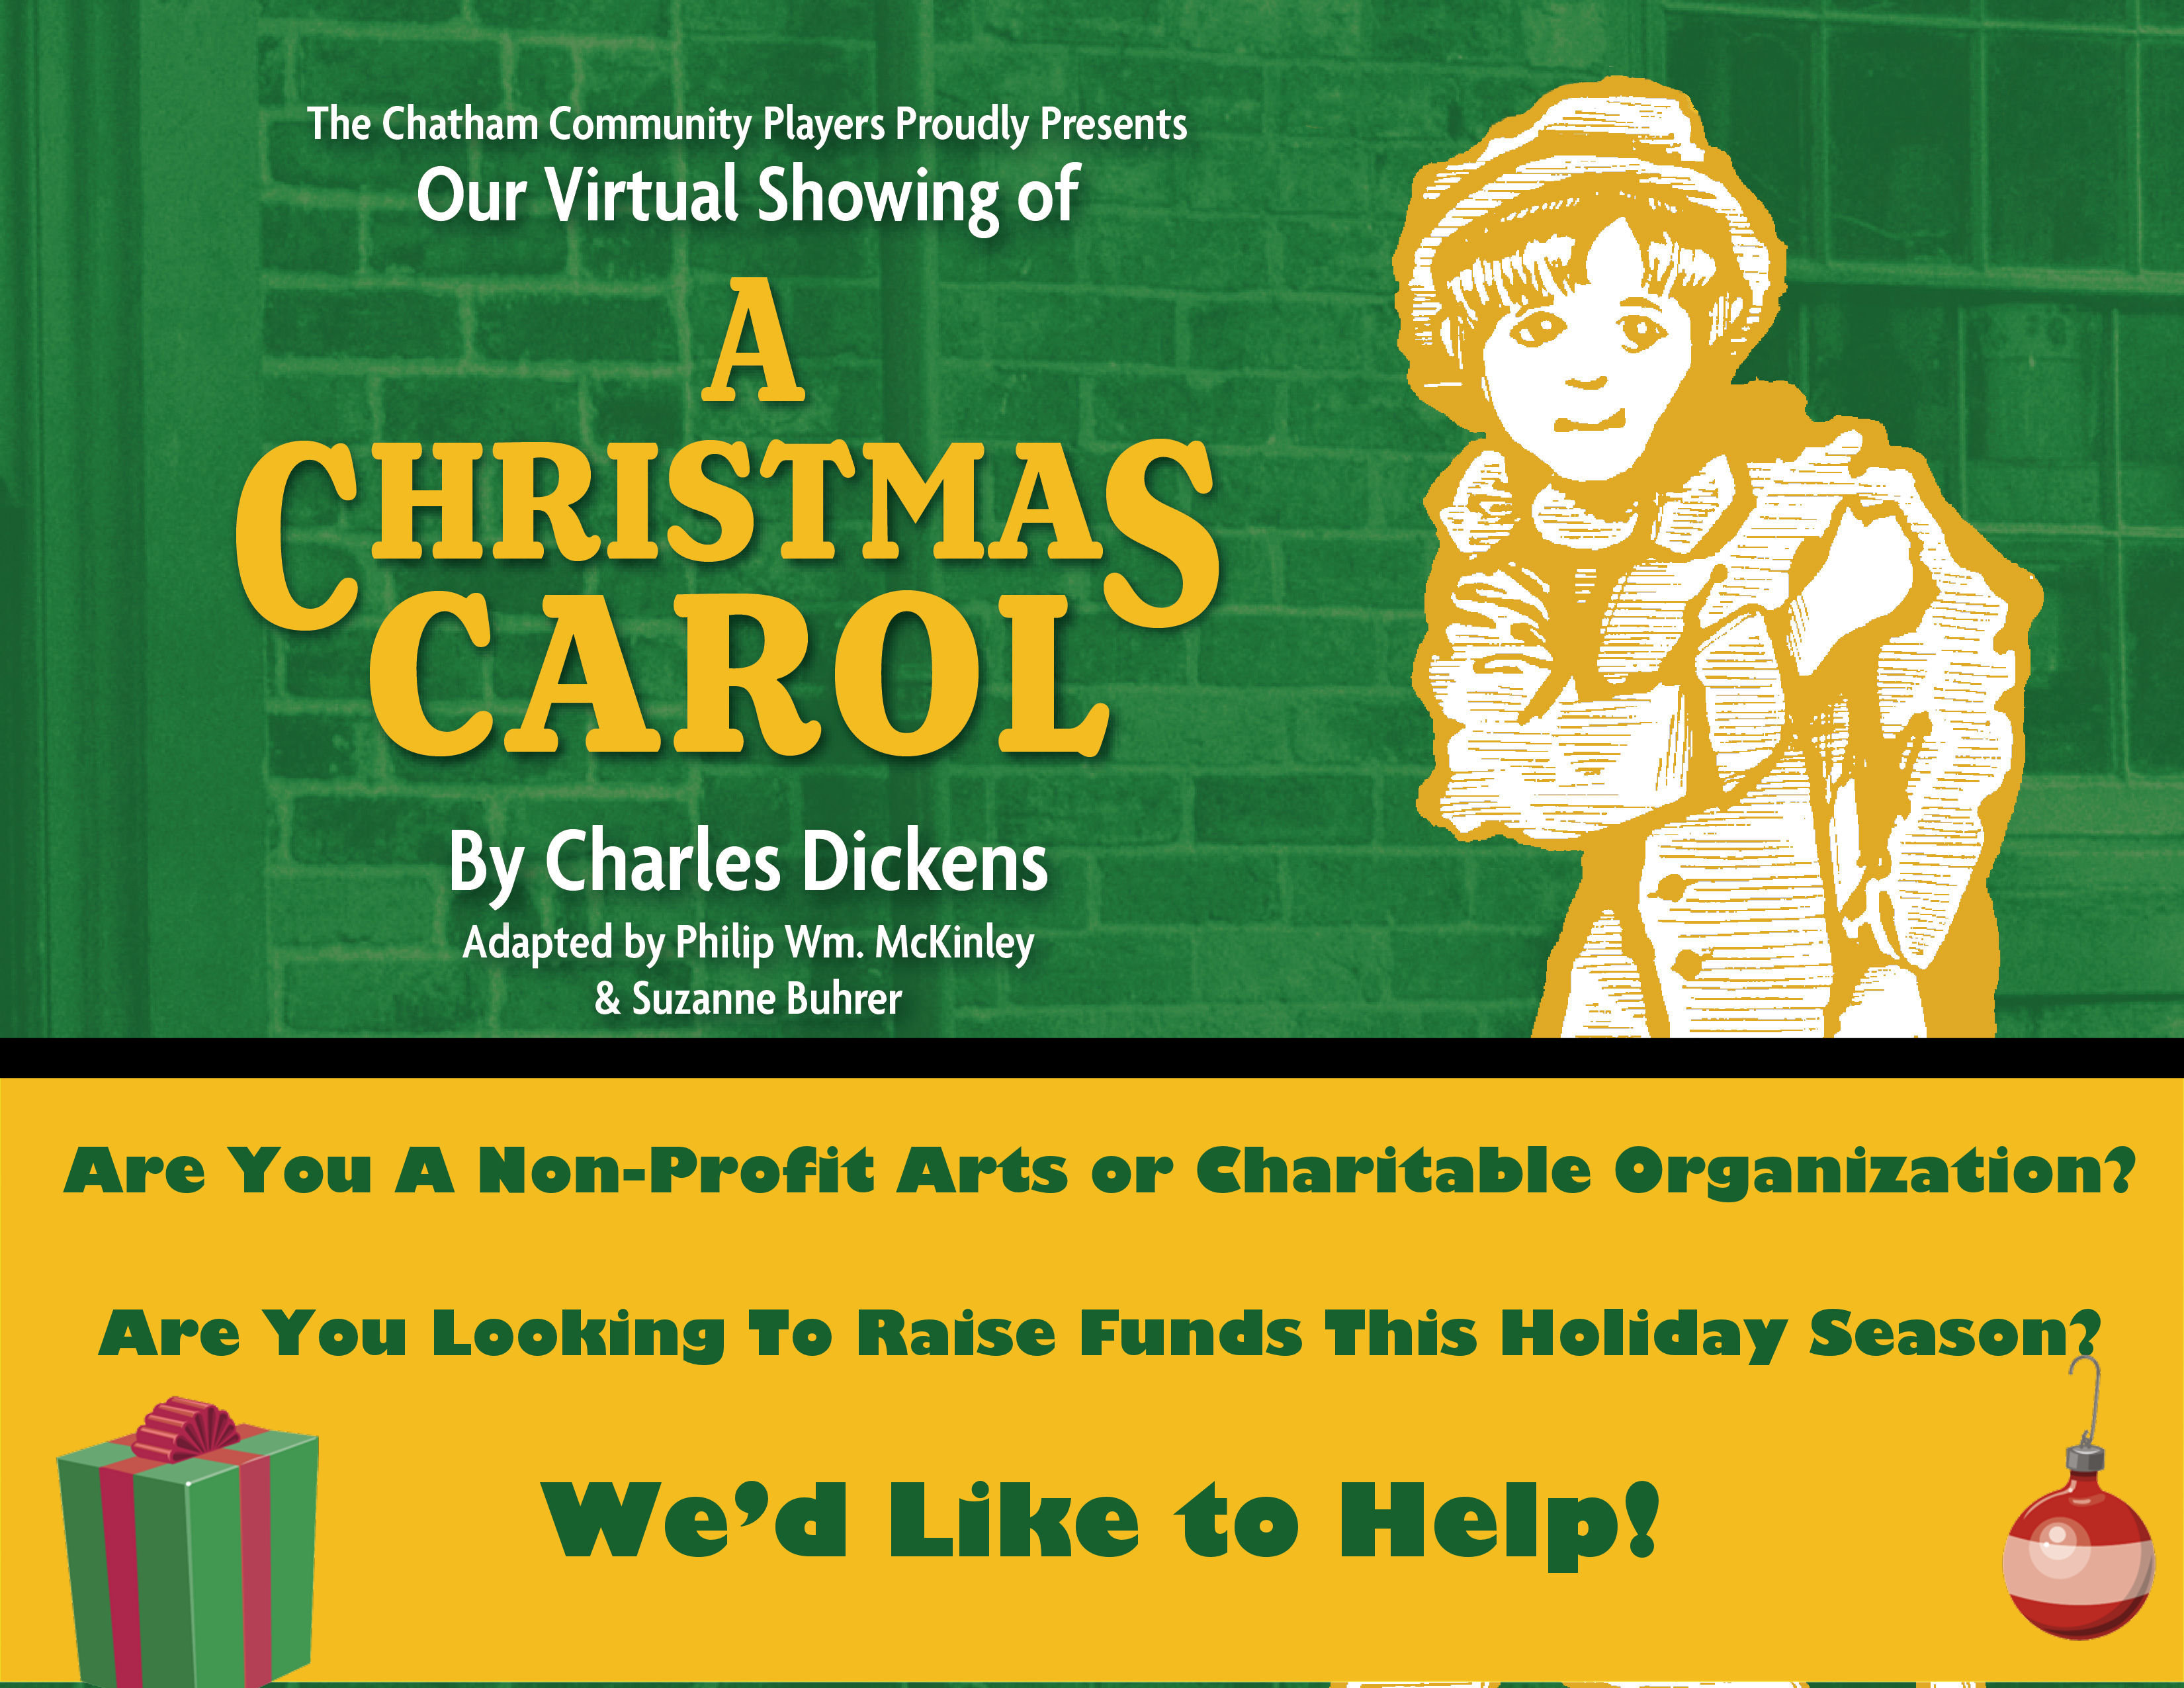 A Christmas Carol - Special Partnership for Non-Profits Arts and Charitable Organizations